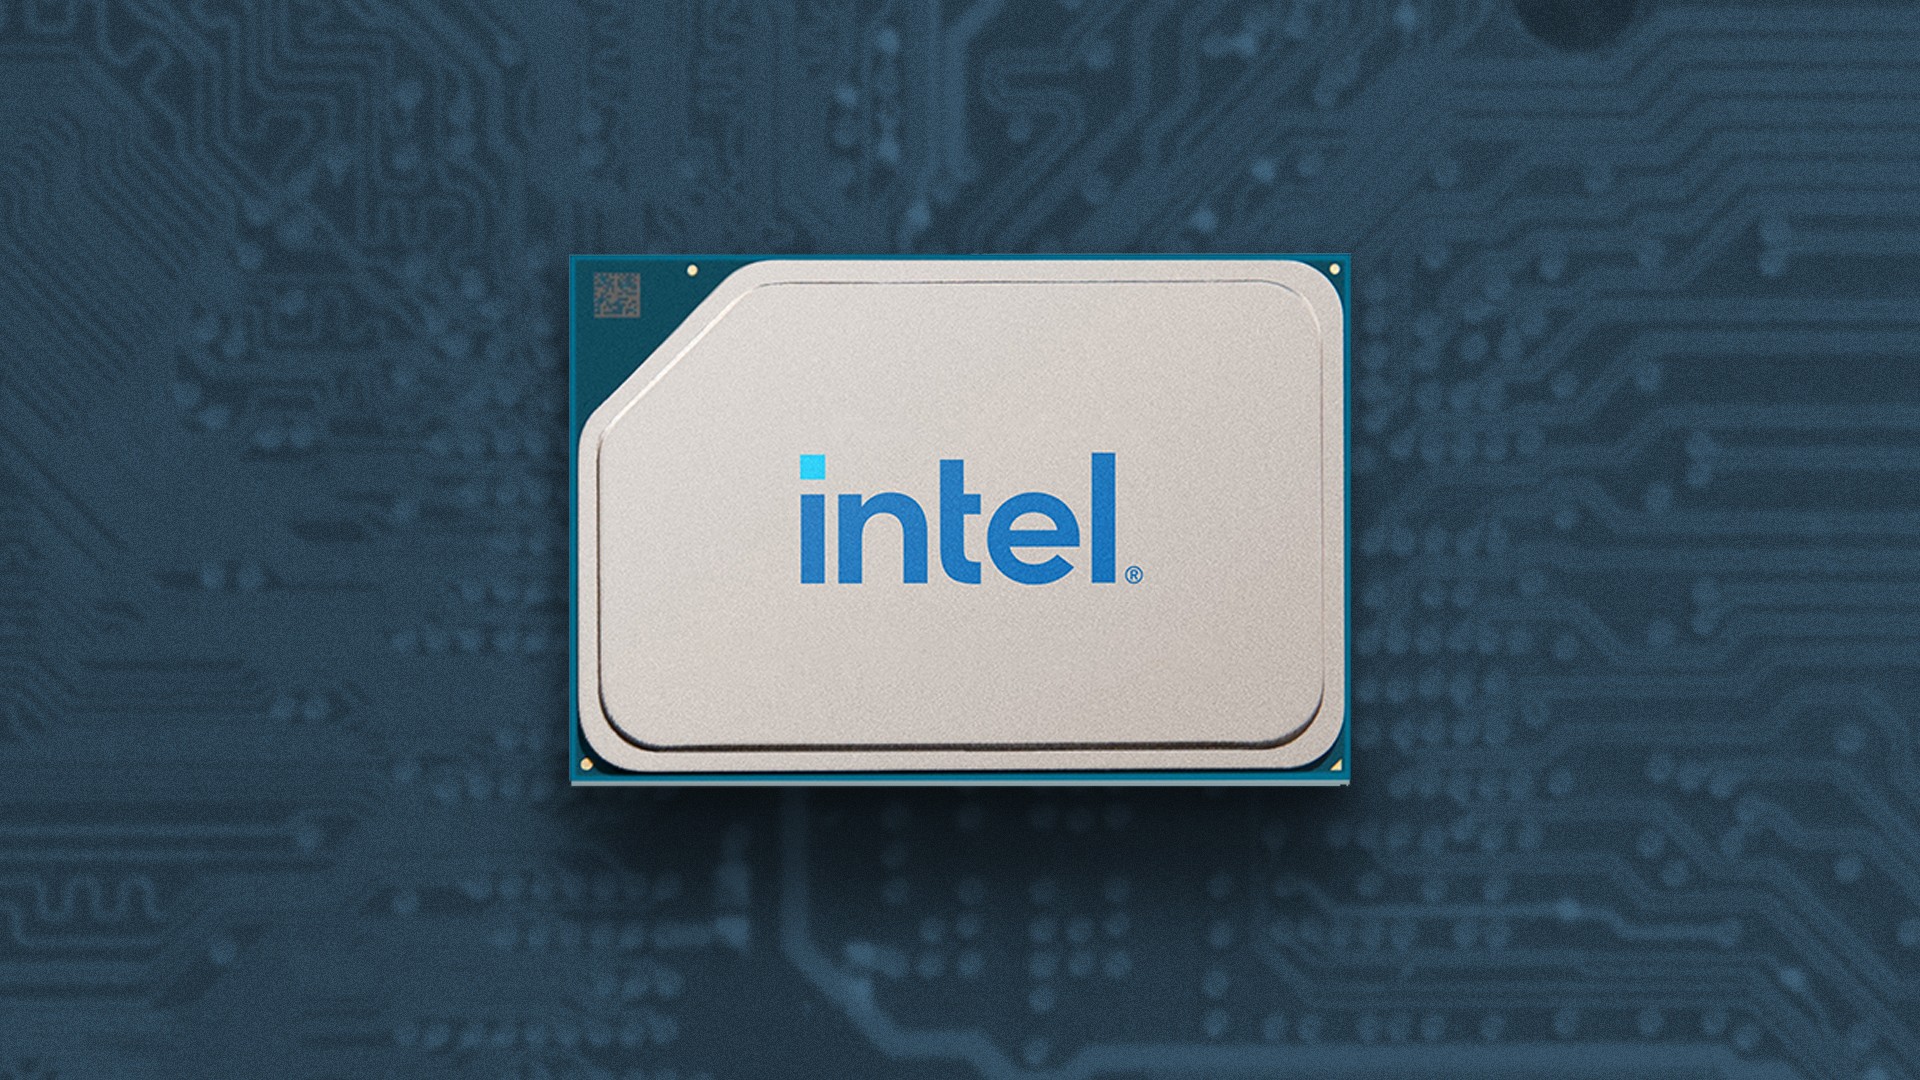 Intel Arc Alchemist GPUs can use Samsung's 16Gbps GDDR6 memory; see image